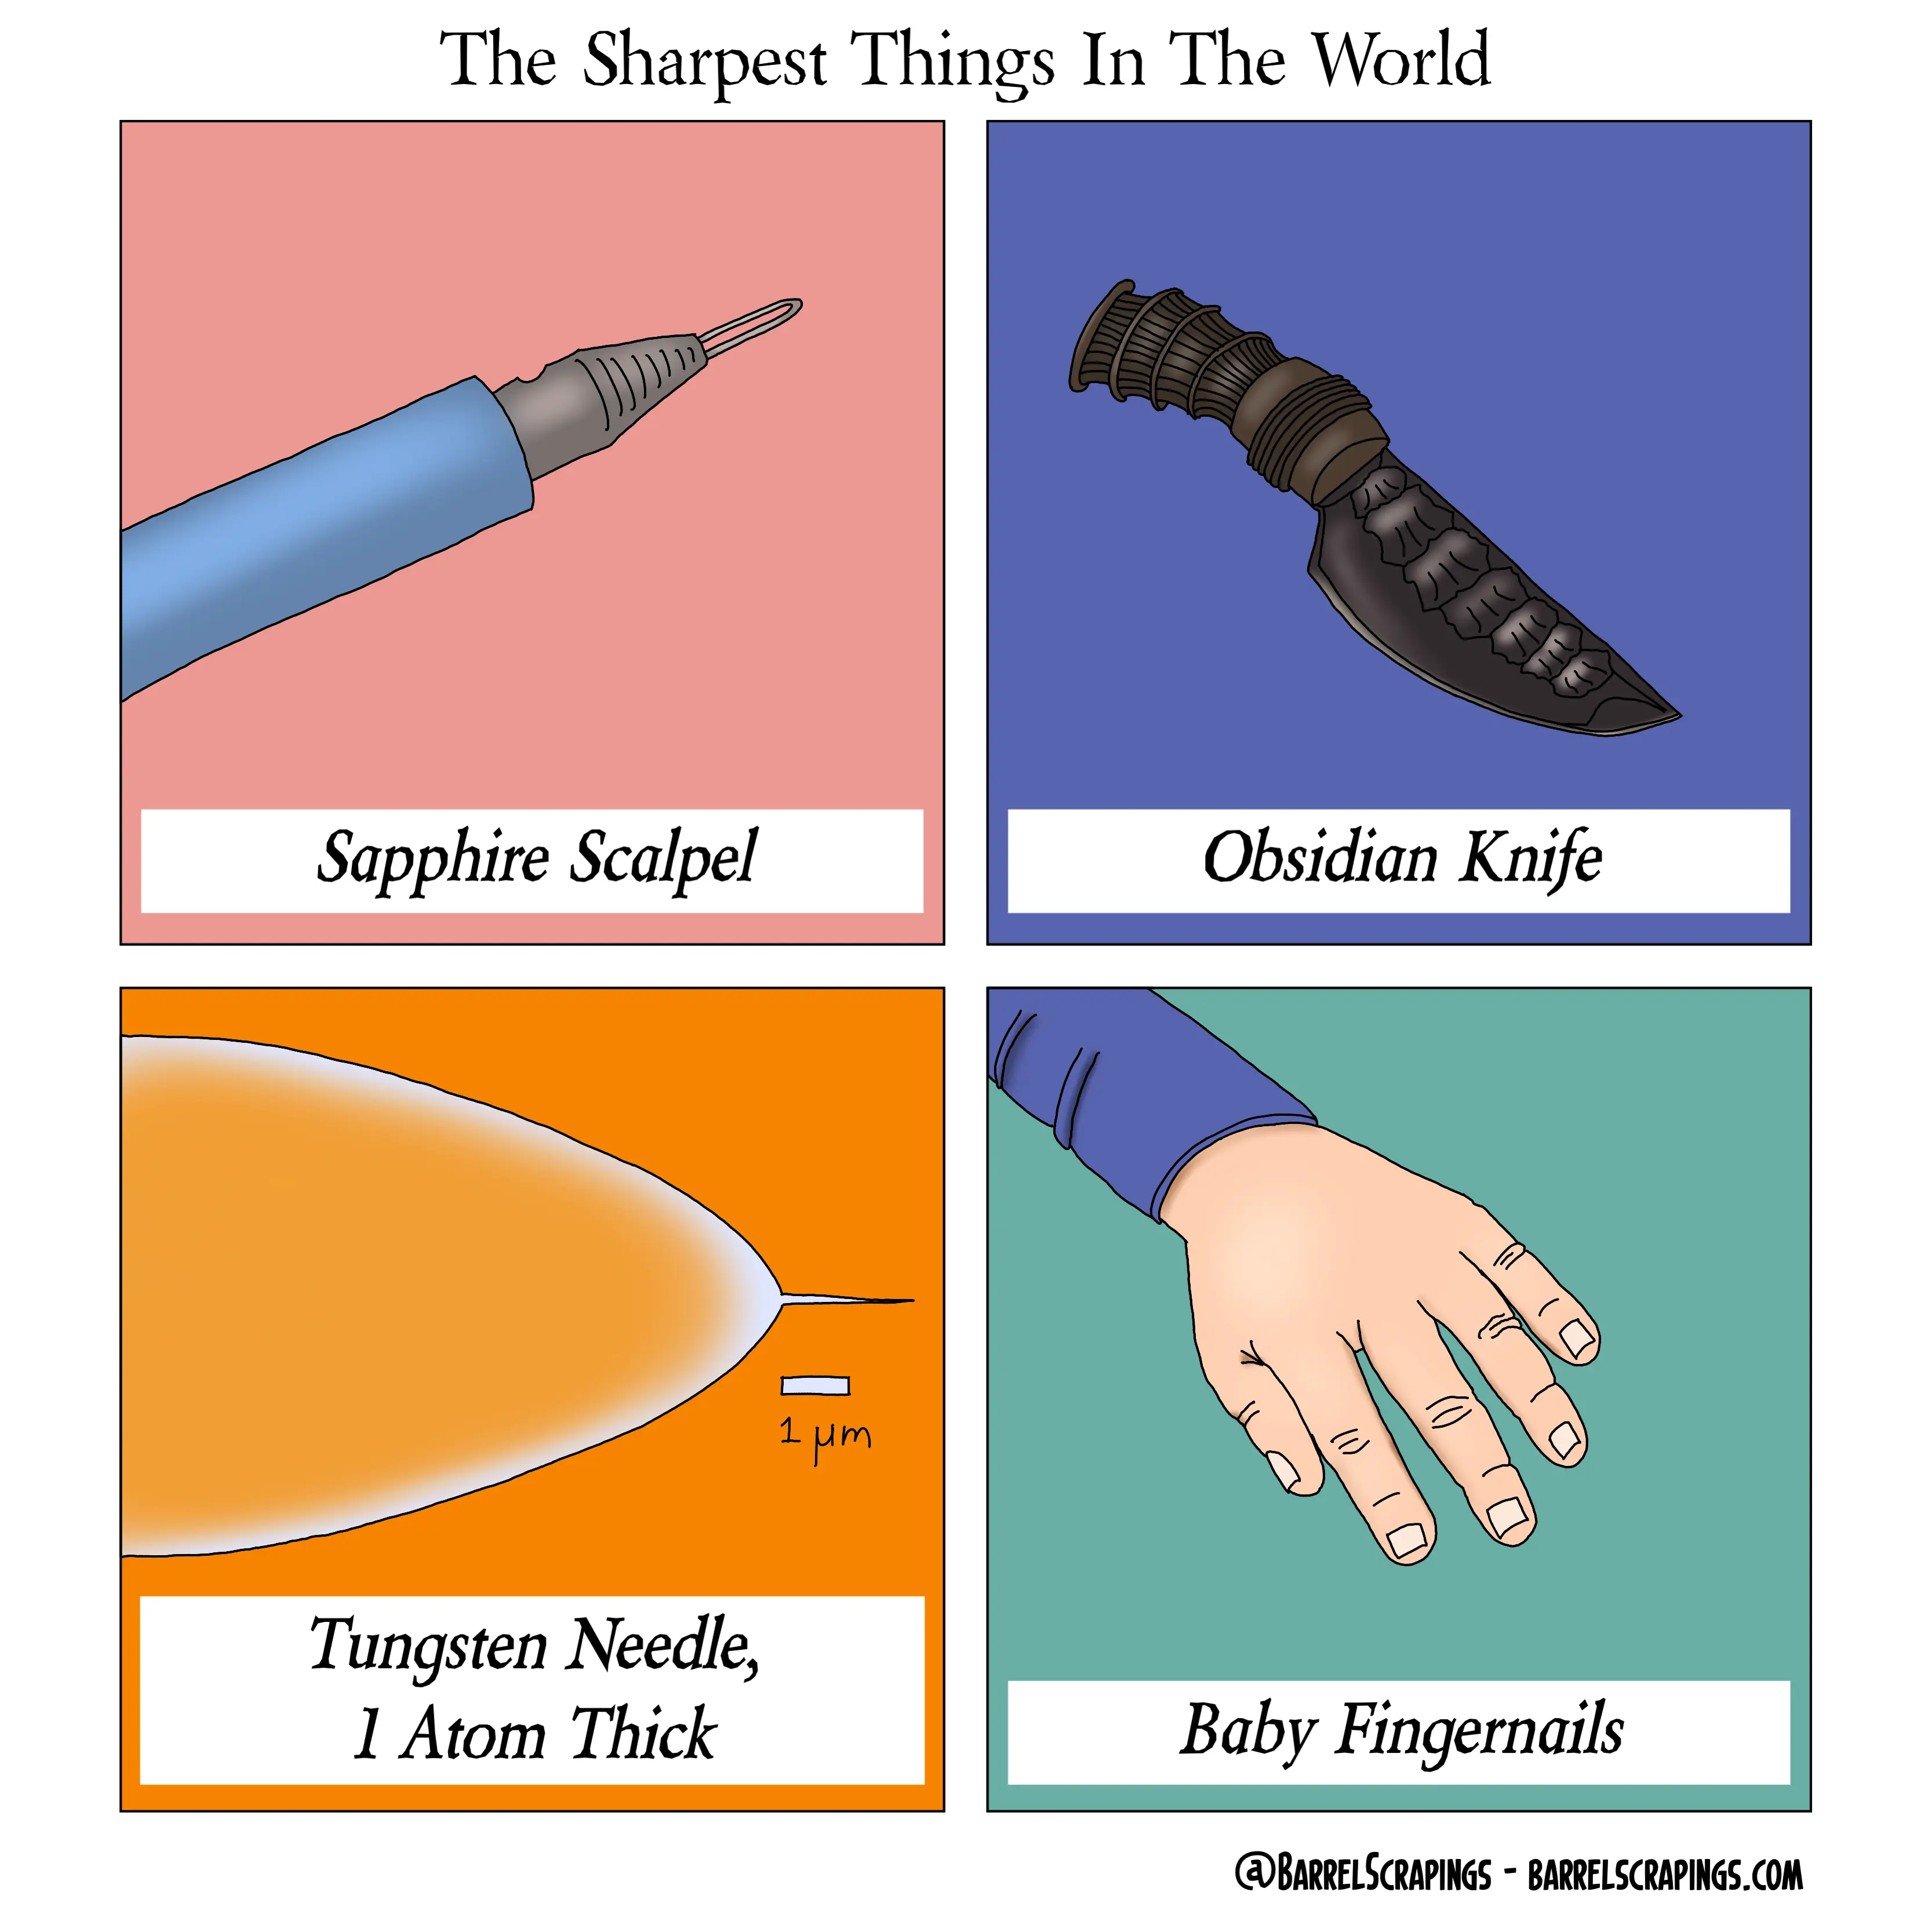 Panel 1: Sapphire scalpel. Panel 2: Obsidian knife. Panel 3: Tungsten needle, 1 atom thick. Panel 4: Baby fingernails